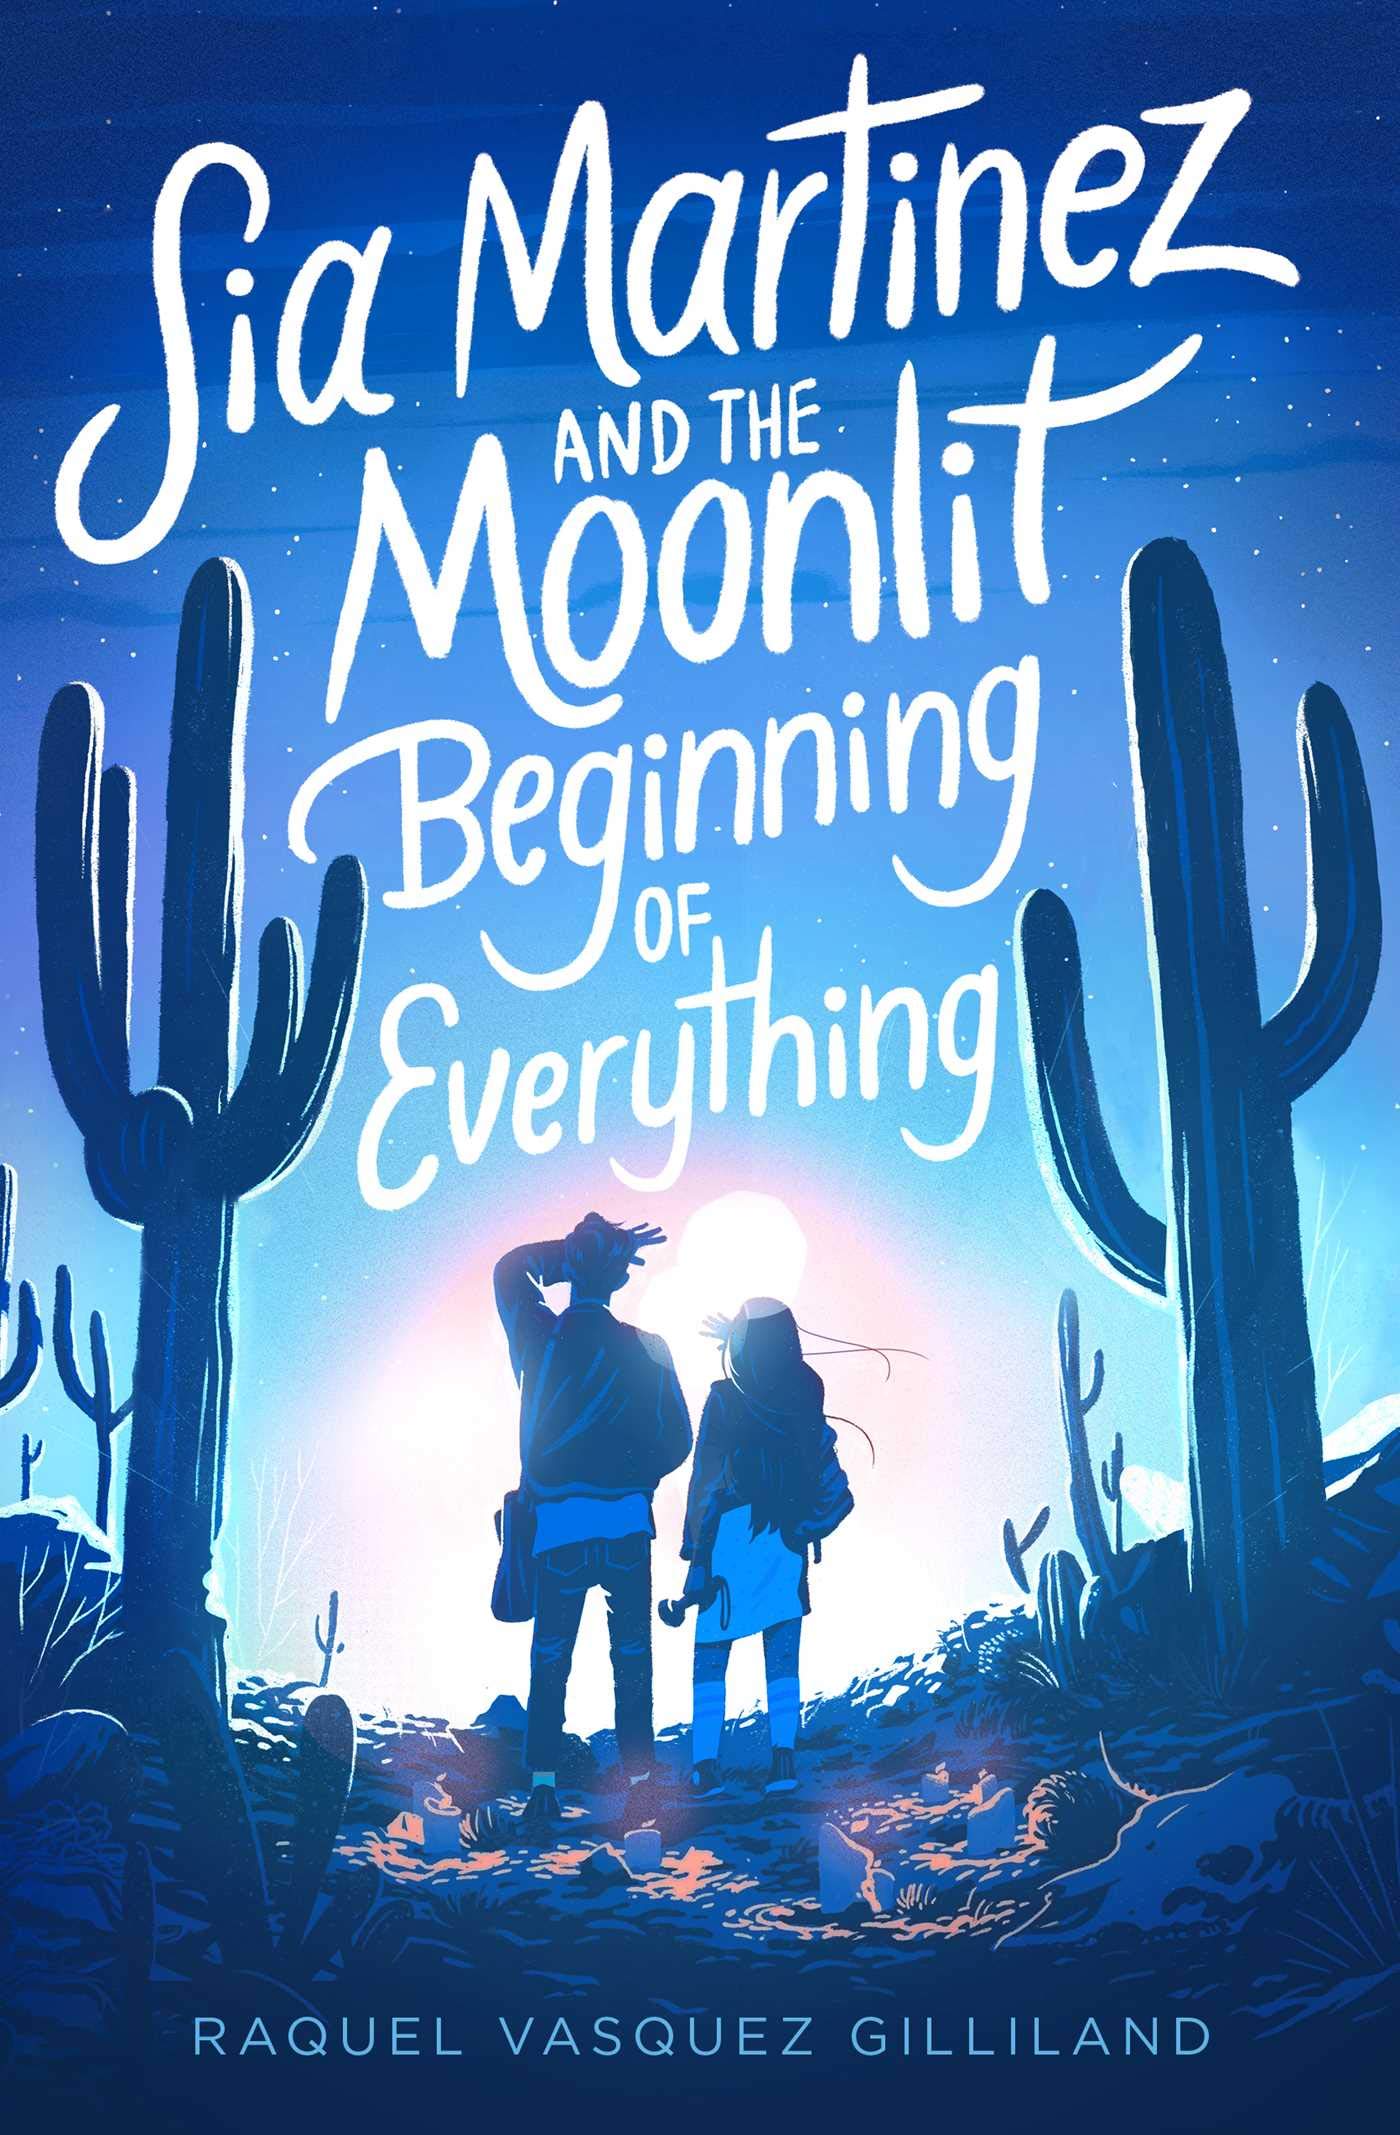 Sia Martinez and the Moonlit Beginning of Everything | Raquel Vasquez Gilliland